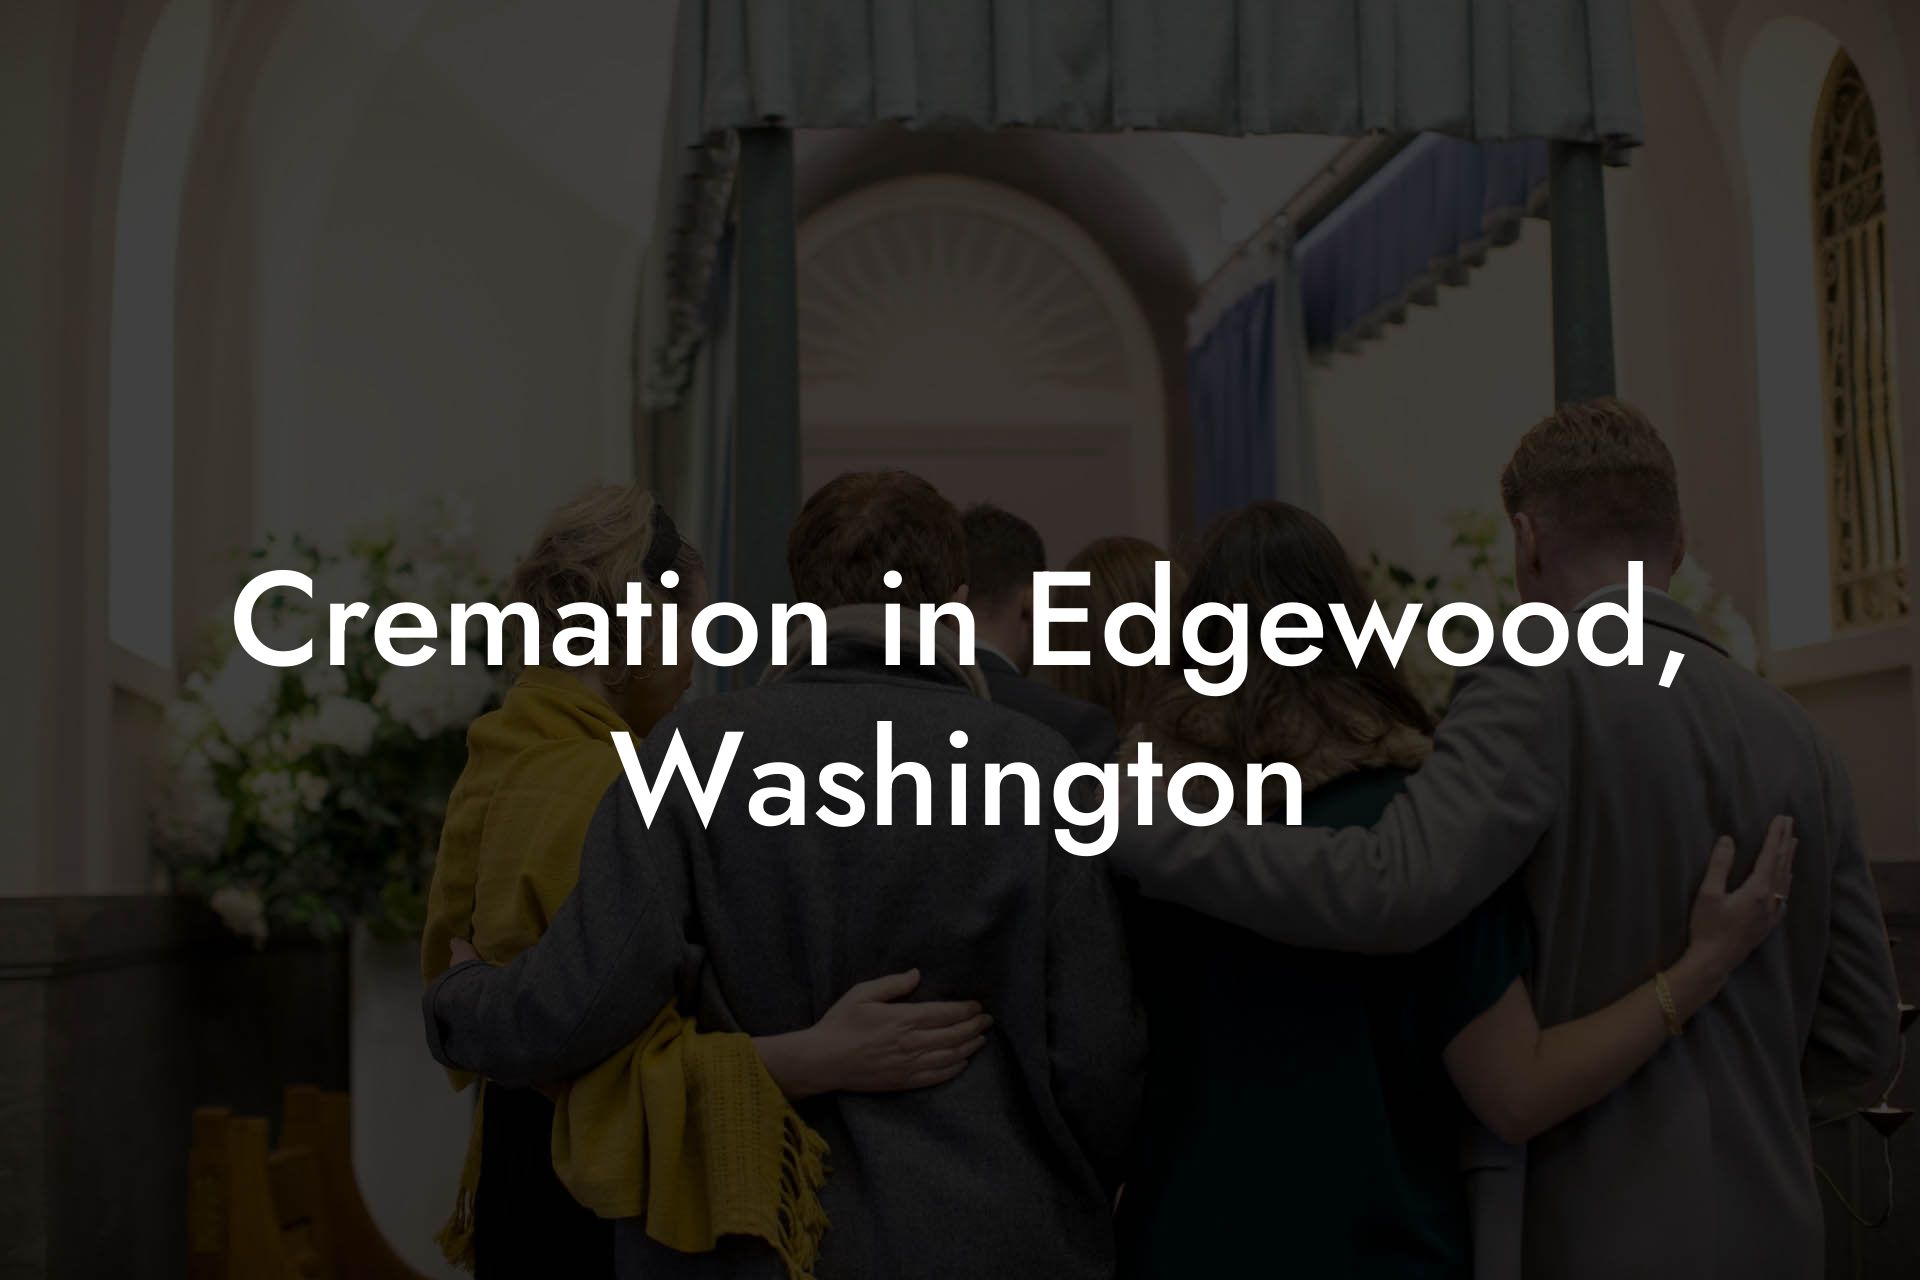 Cremation in Edgewood, Washington